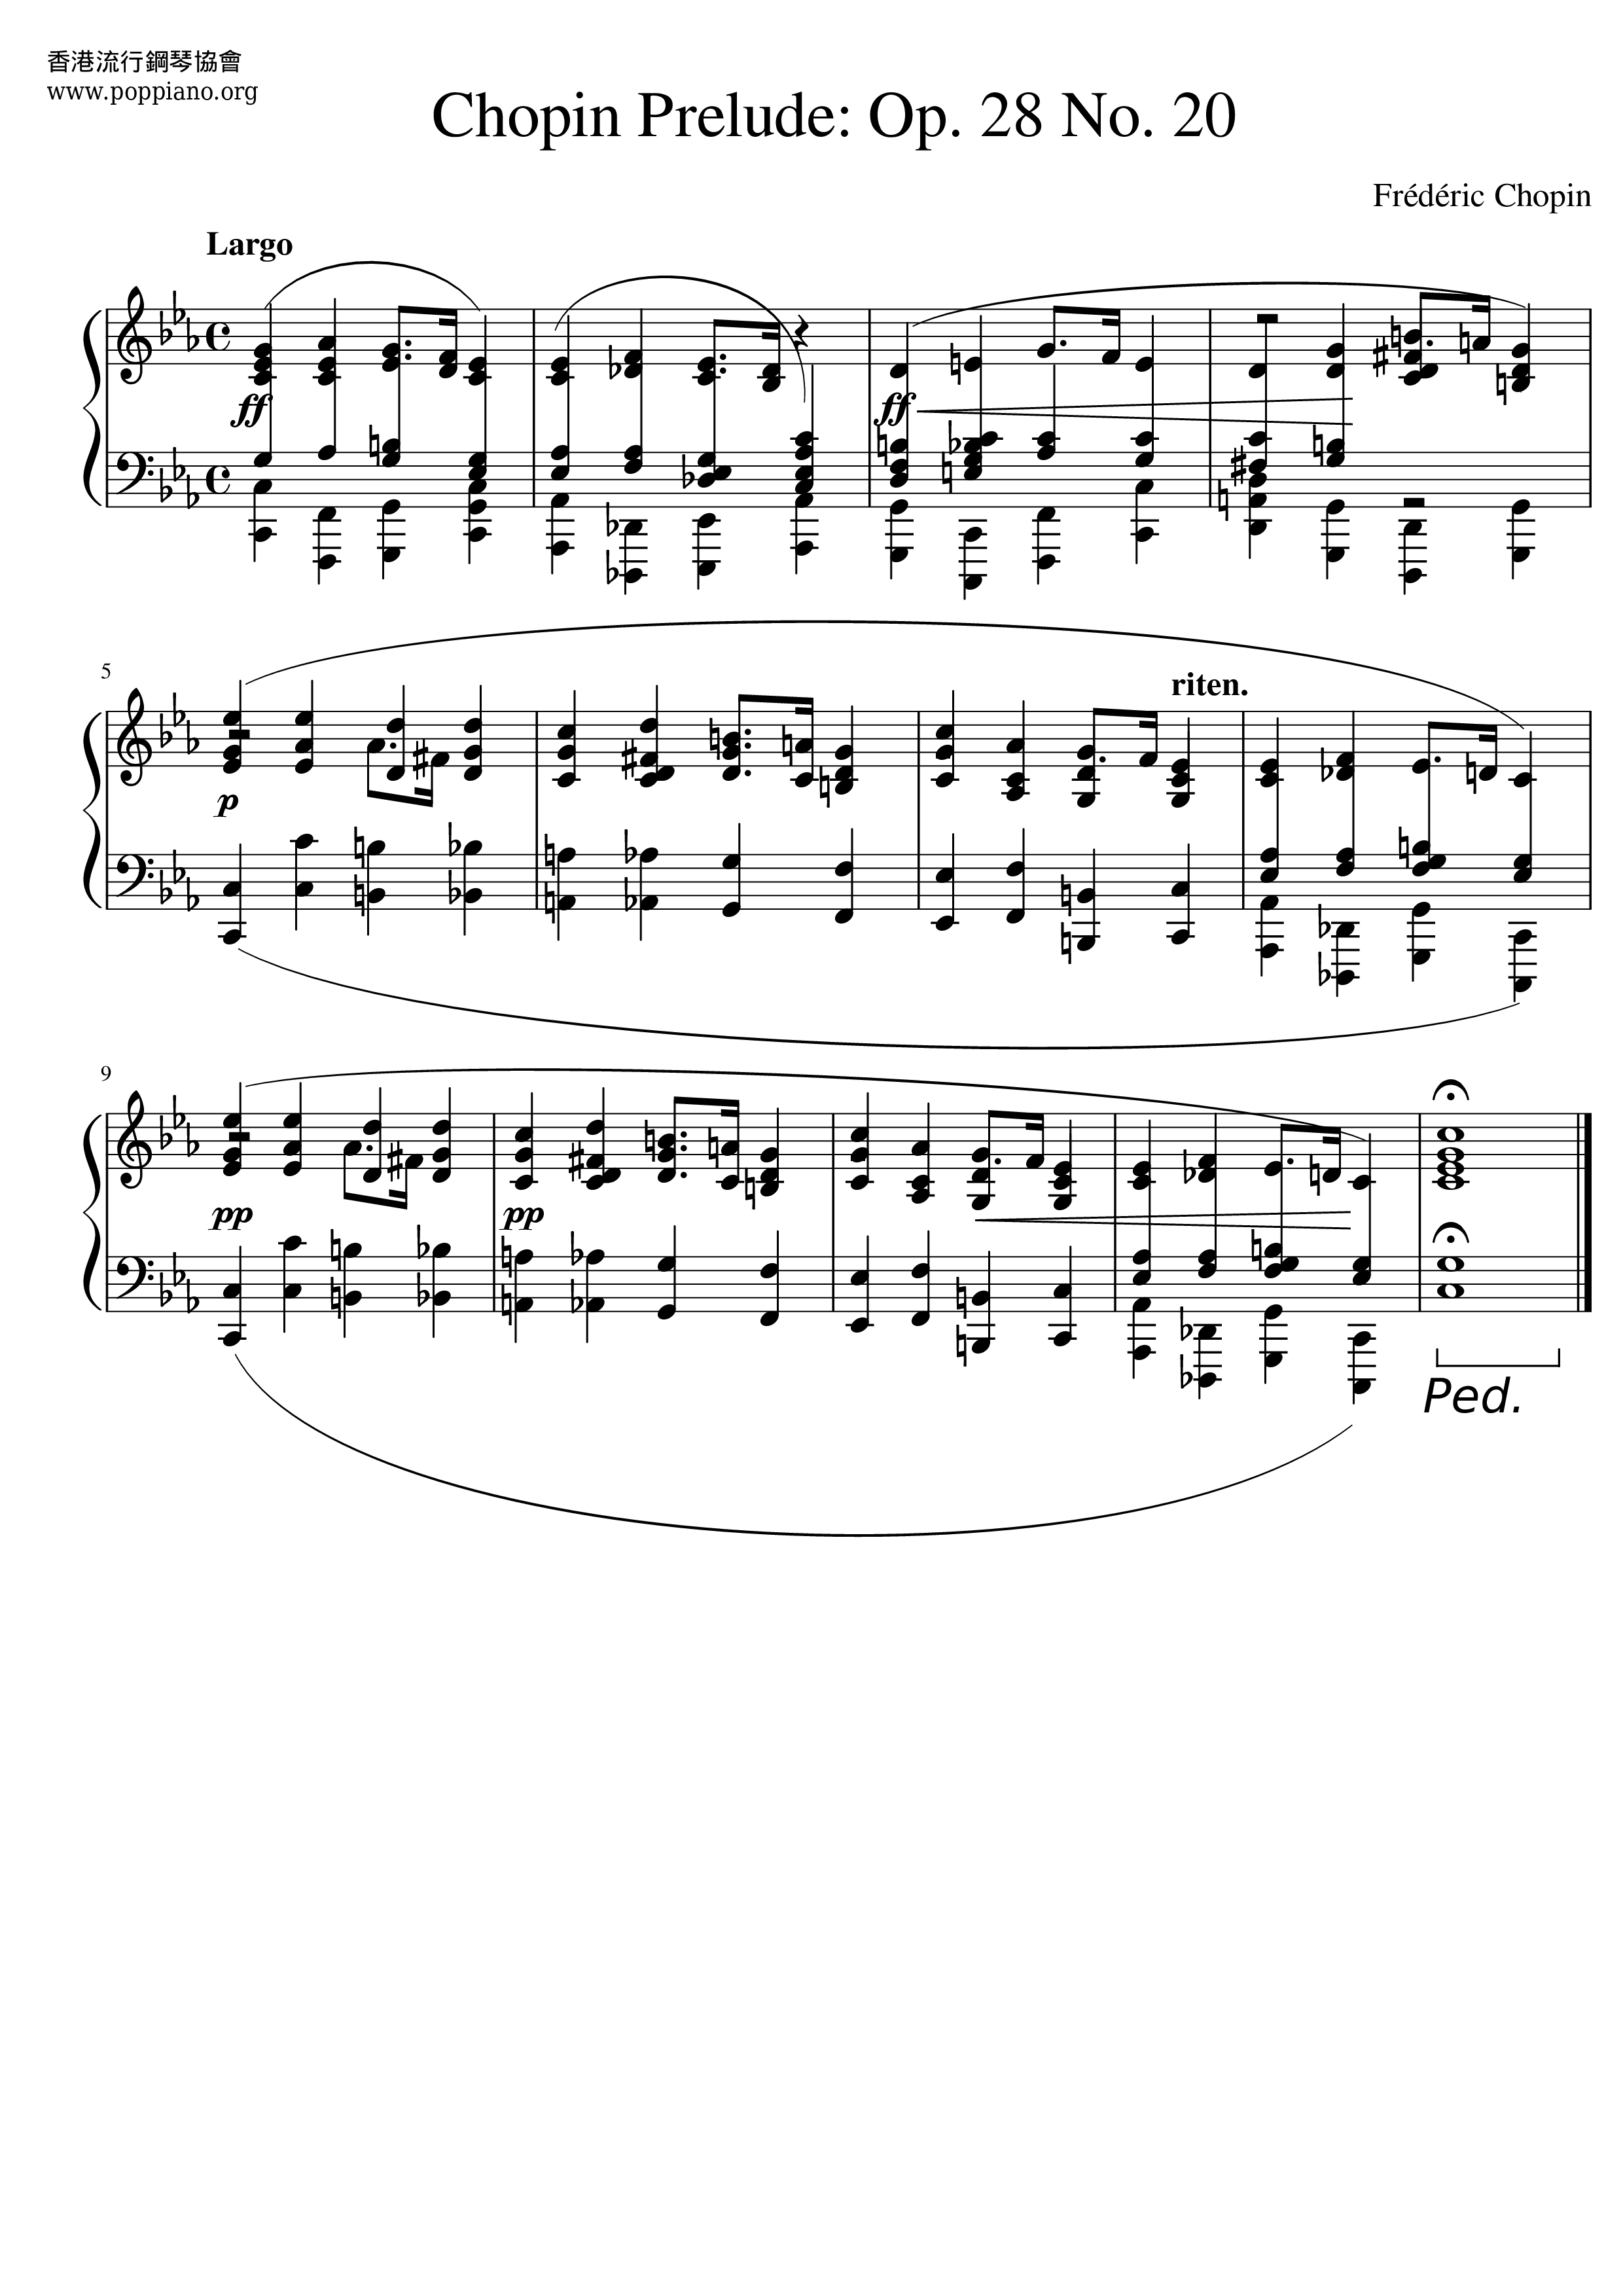 Prelude Op. 28 No. 20 Score